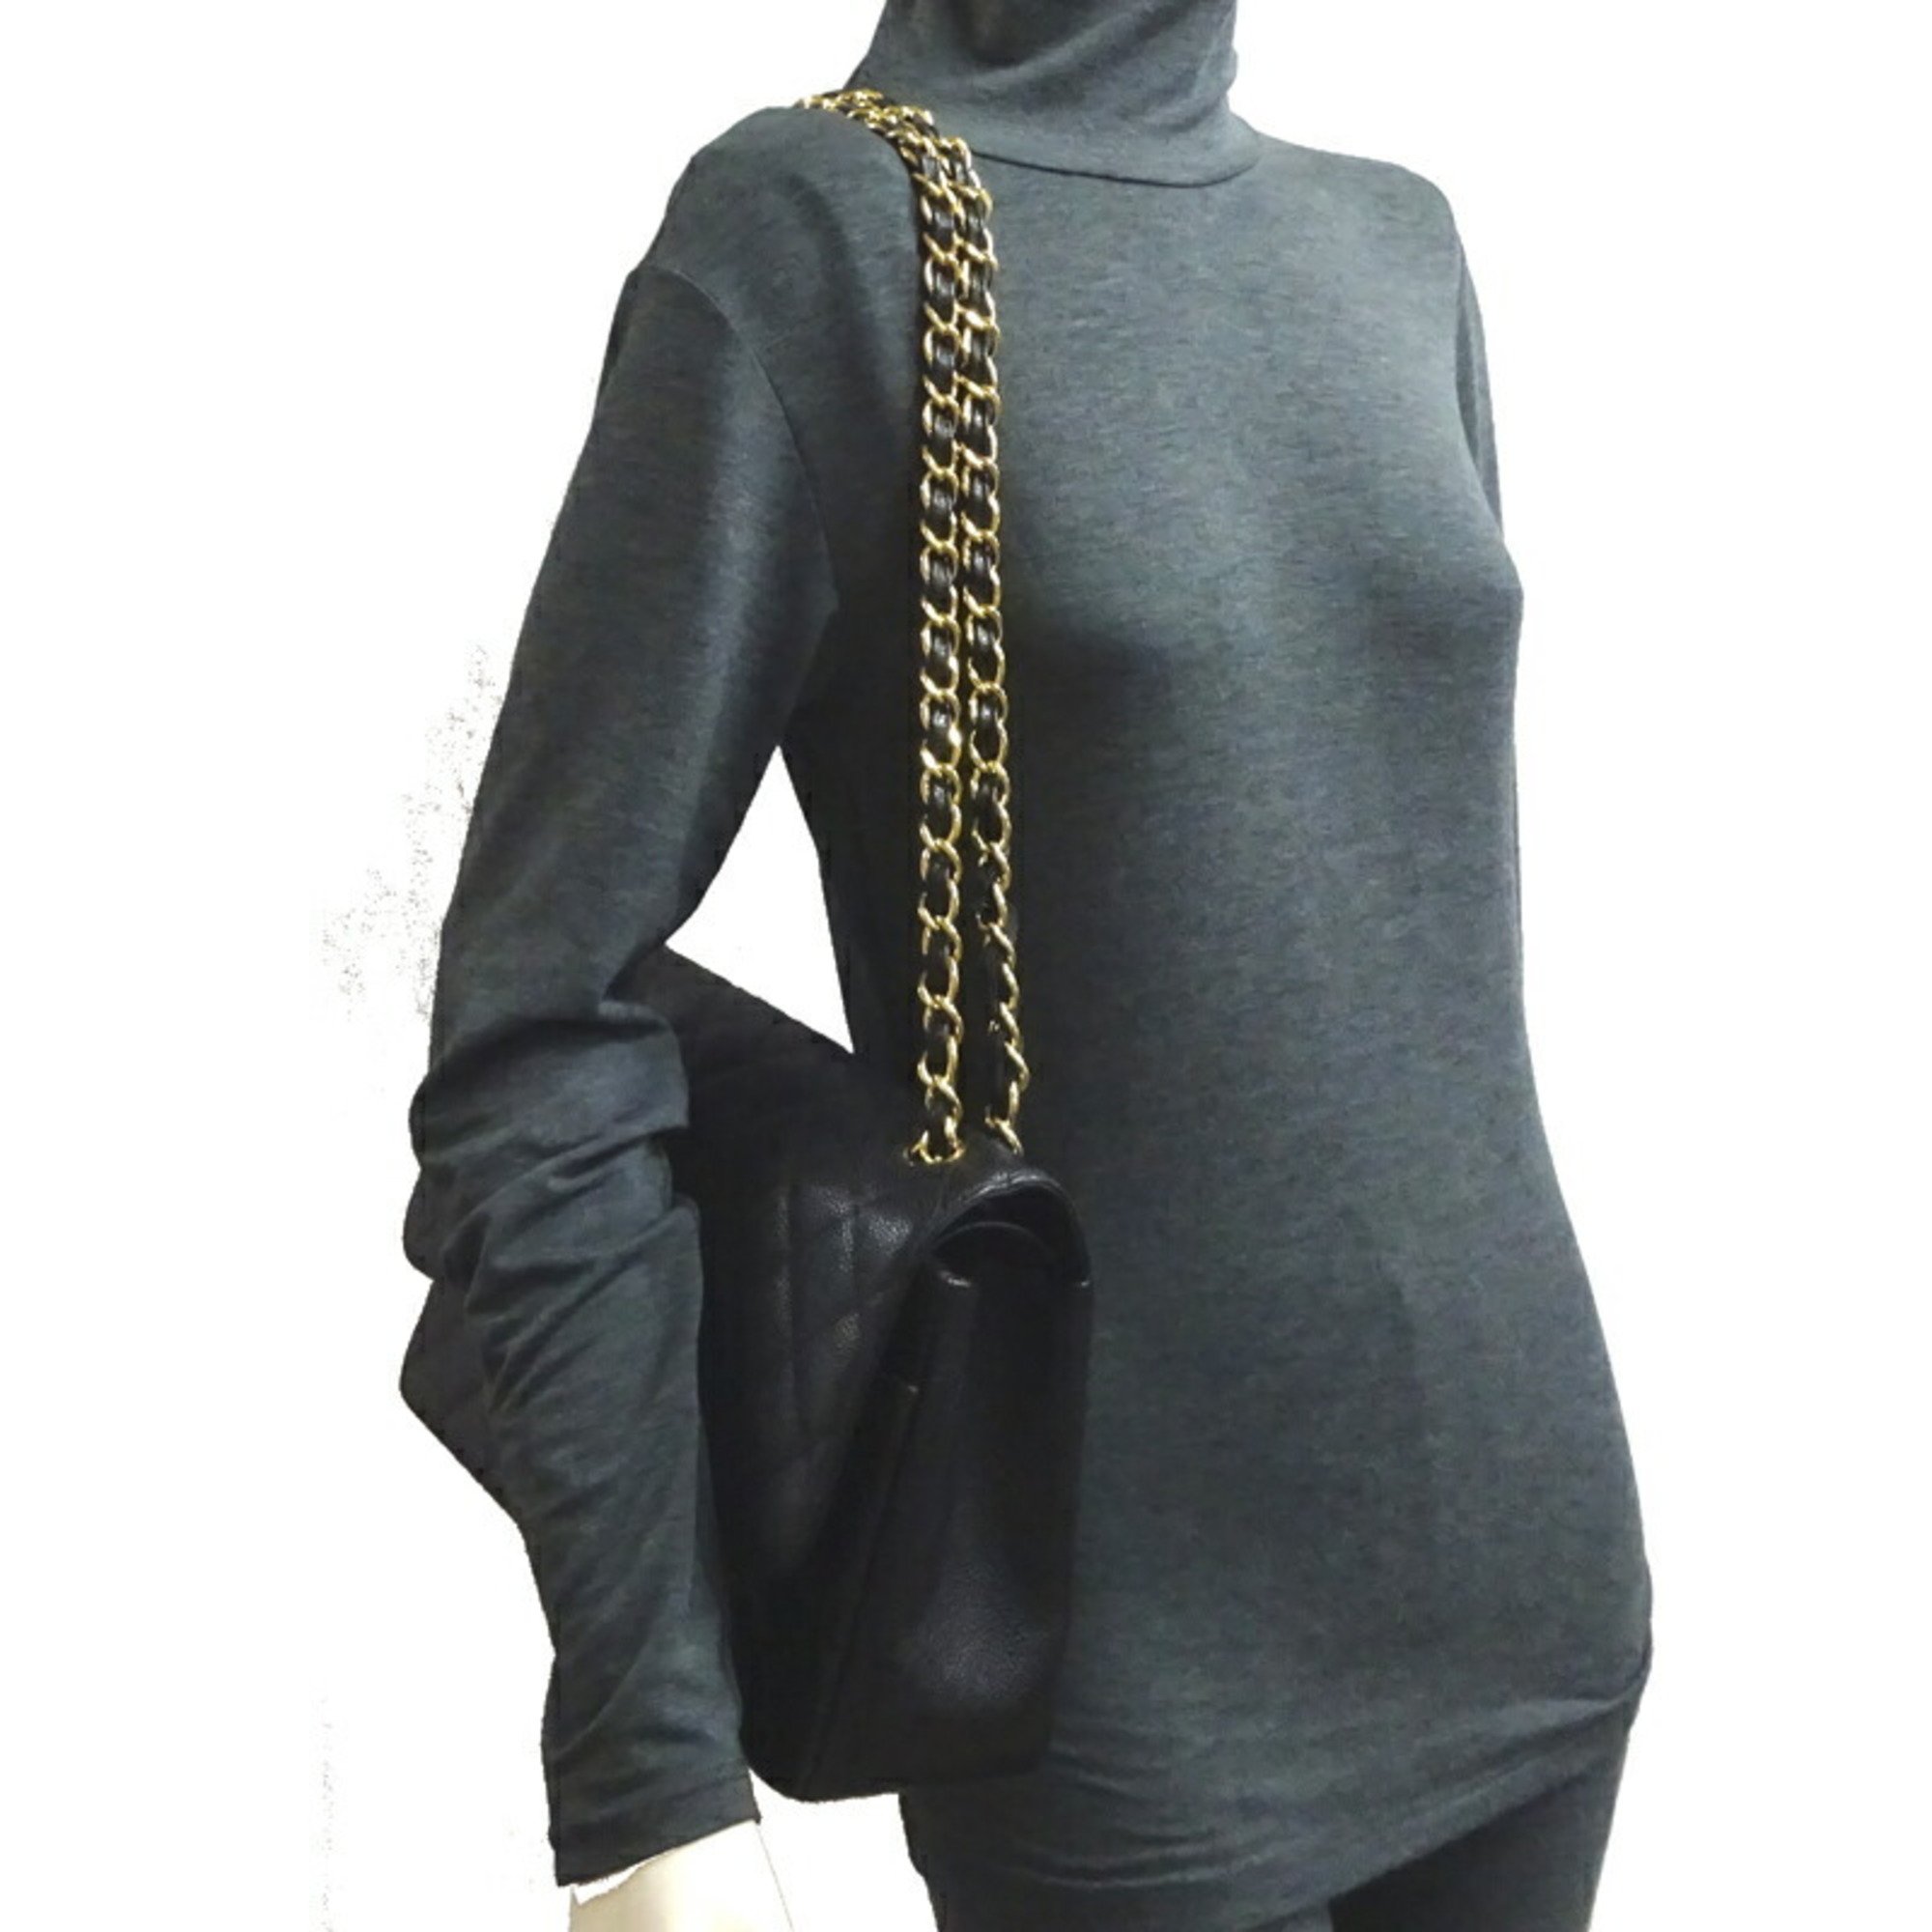 Chanel Matelasse 30 Chain Shoulder Women's Bag Caviar Skin Black